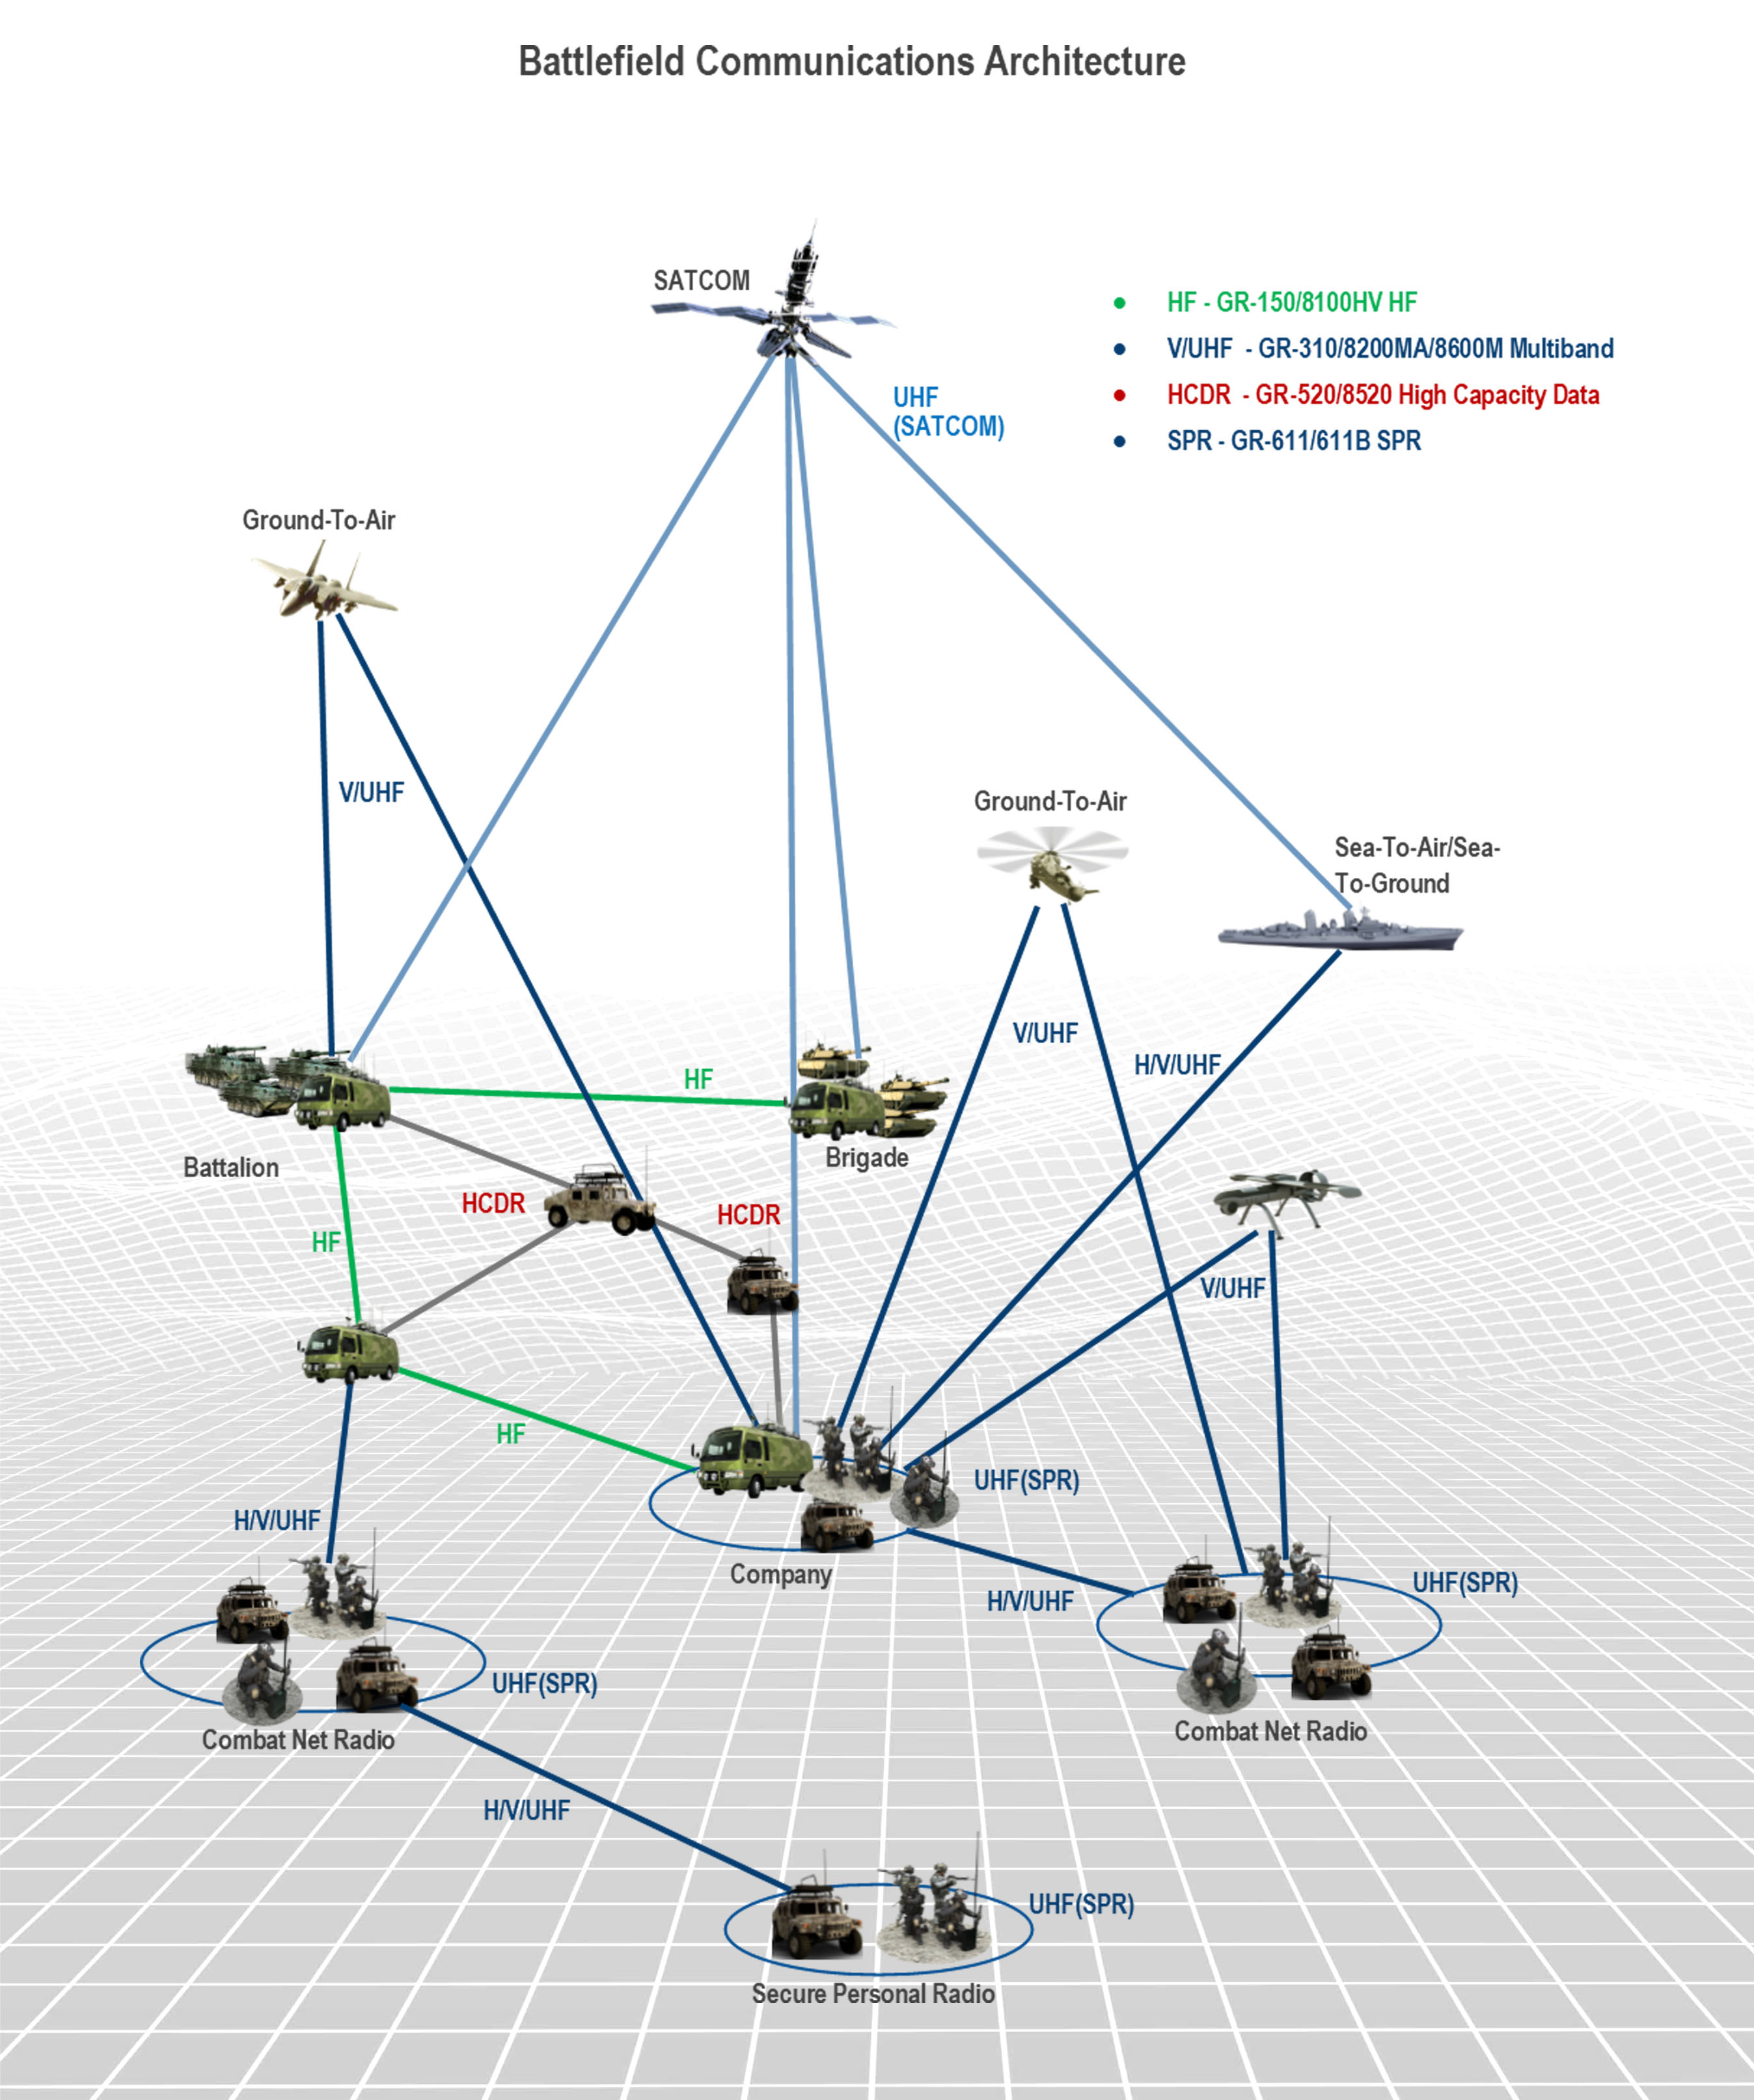 GR-8200MA Battlefield Communications Architecture